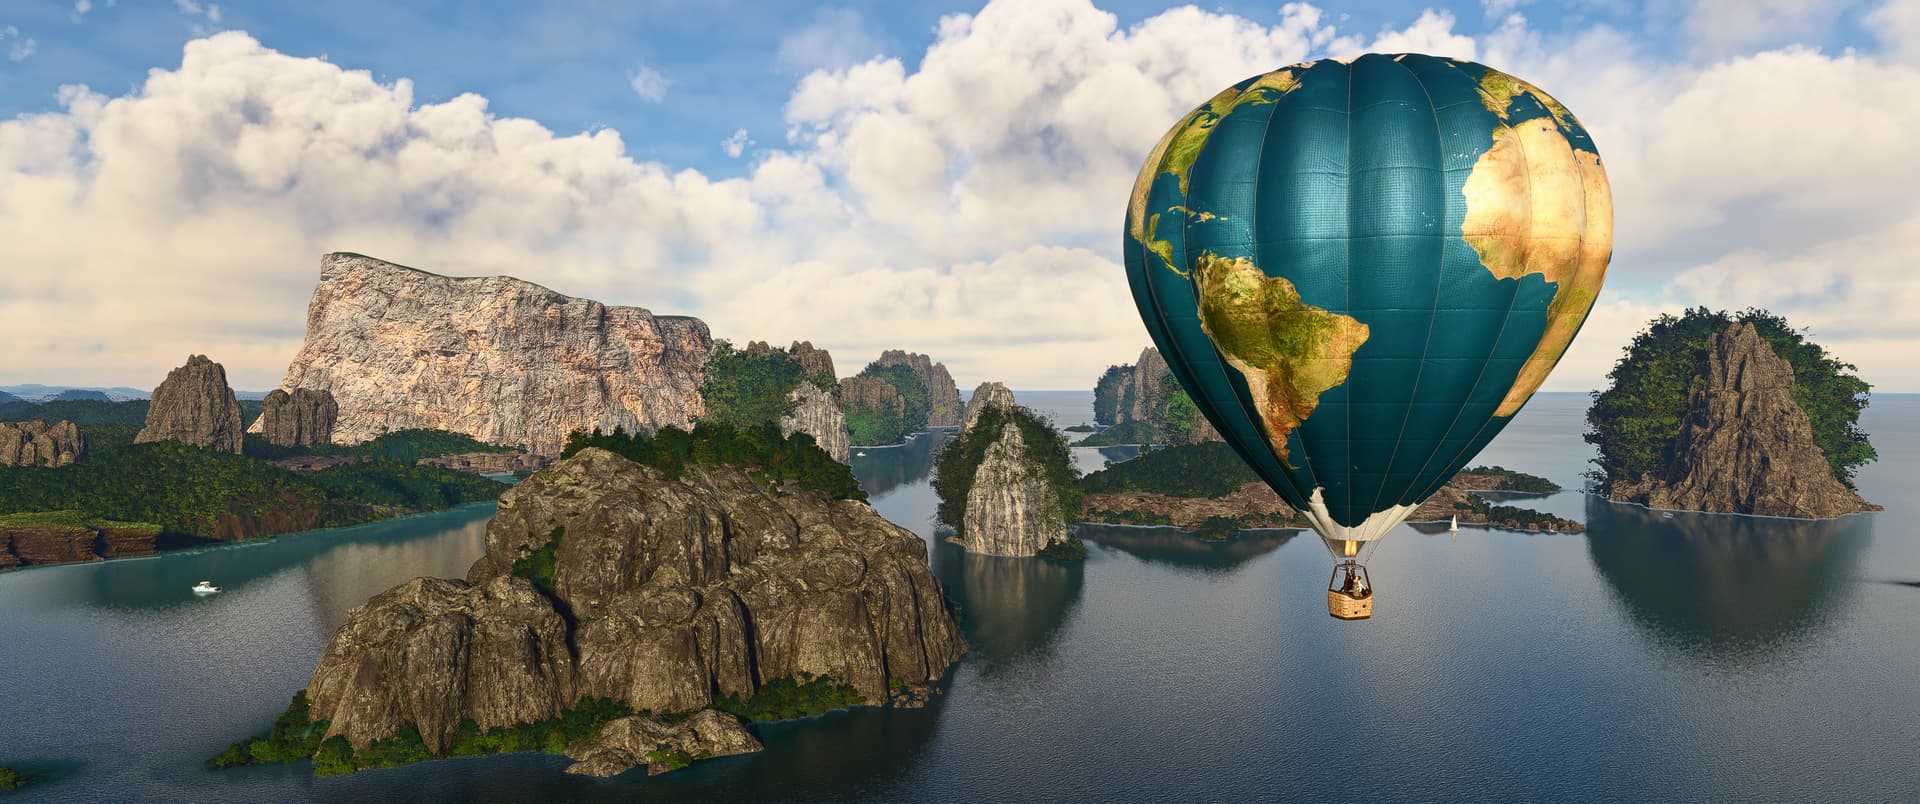 A Hot Air Balloon with the world map paint scheme flies near remote islands